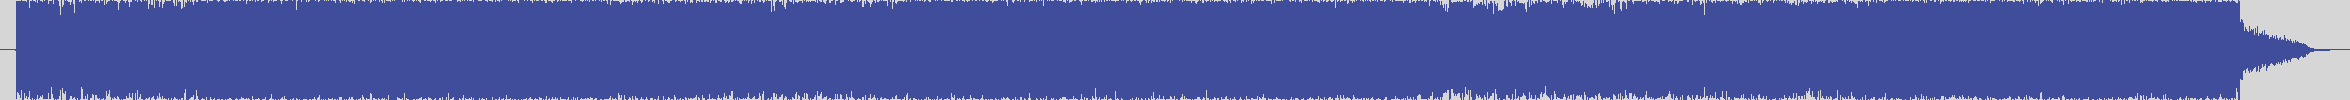 upr [UPR052] Monolog - Lush [Original Mix] audio wave form